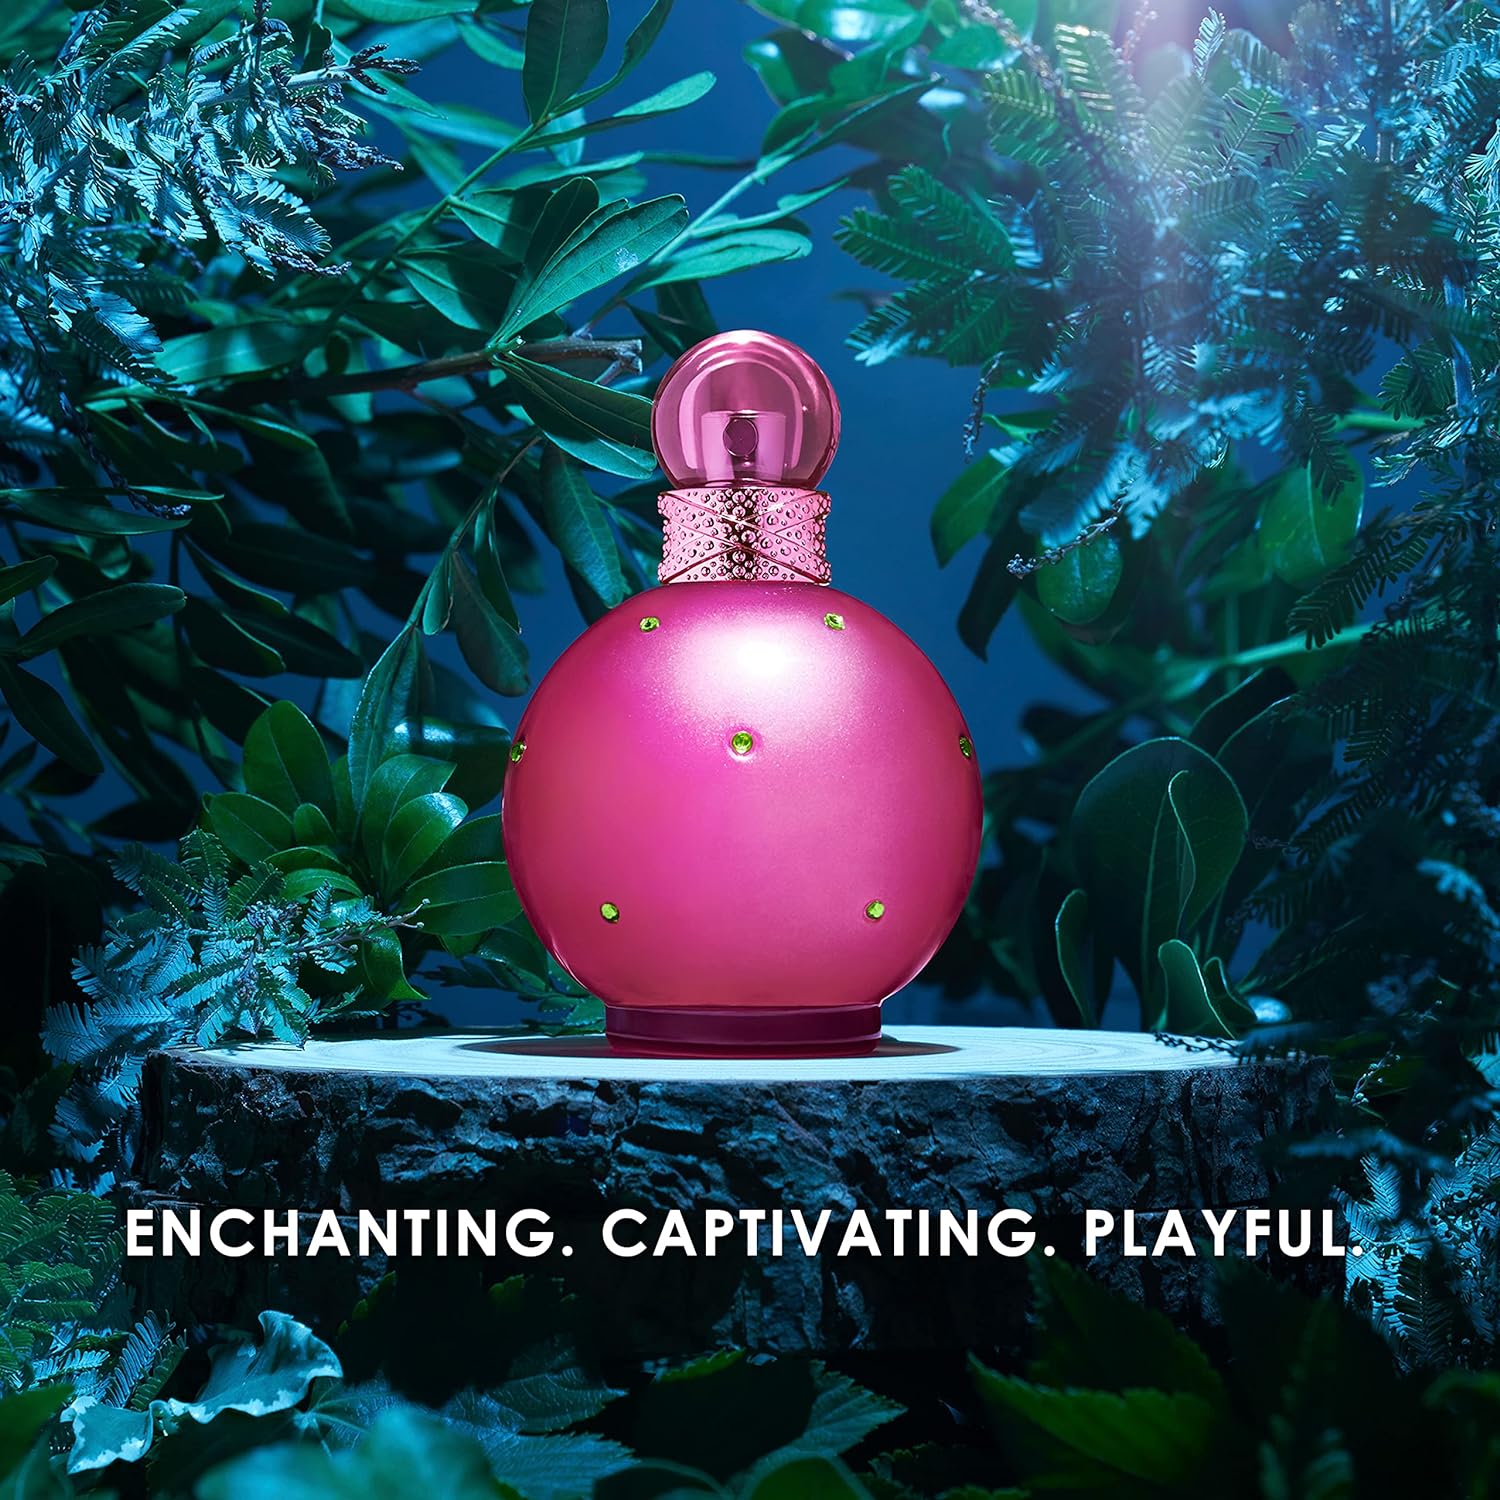 Fantasy Eau de Parfum 100 Ml, Britney Spears